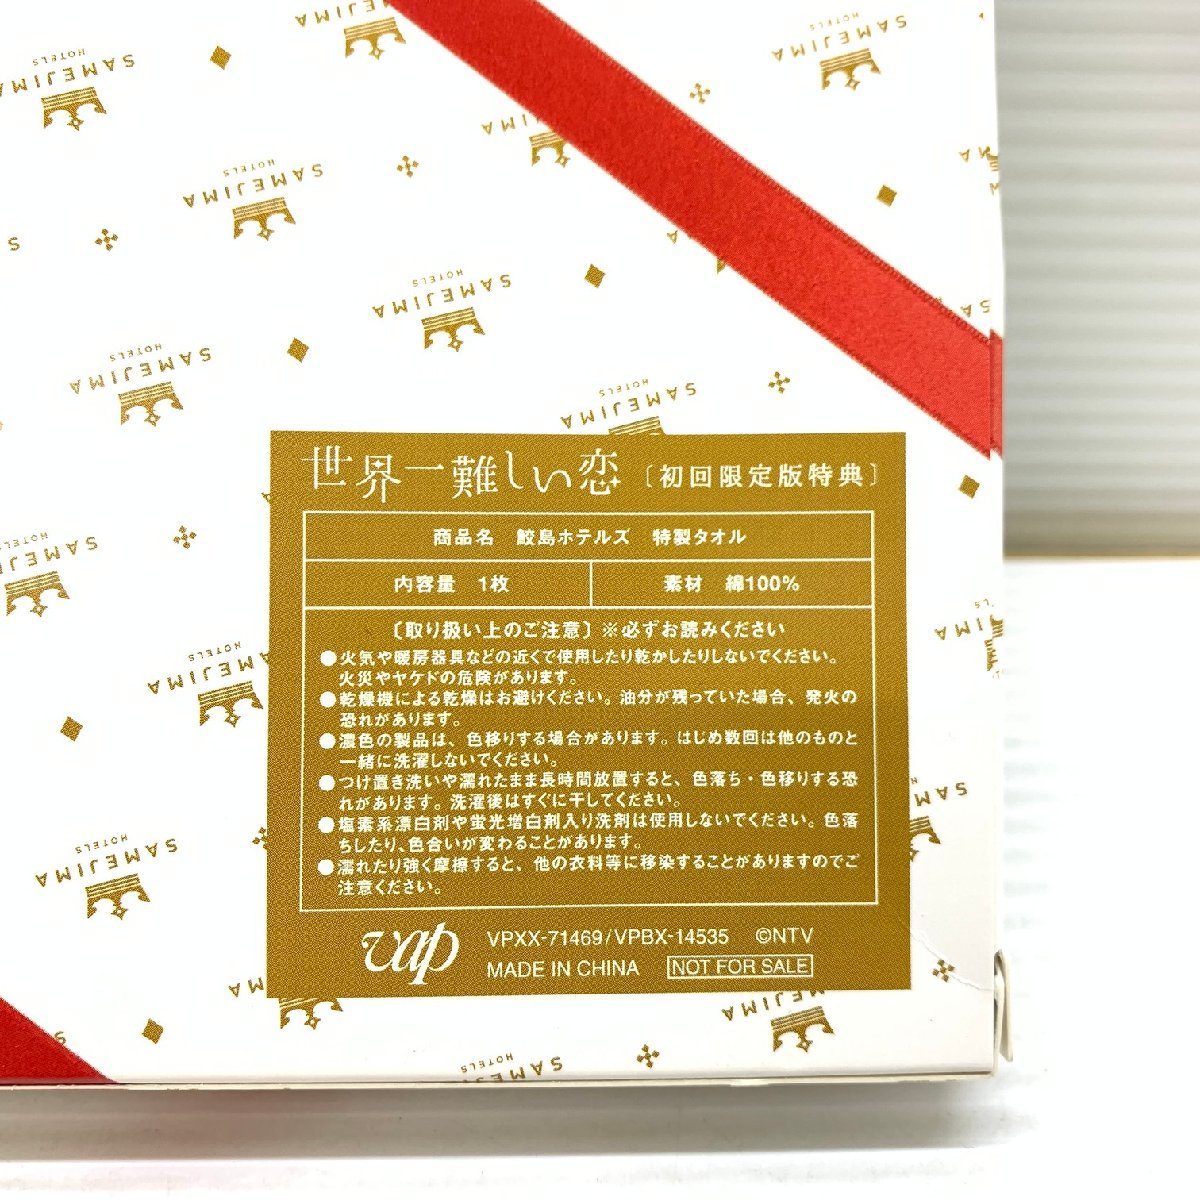 MIN【中古品】 MSMA 世界一難しい恋 DVD BOX 初回限定版 鮫島ホテルズ 特製タオル付 〈8-240119-MK-5-MIN〉_画像3